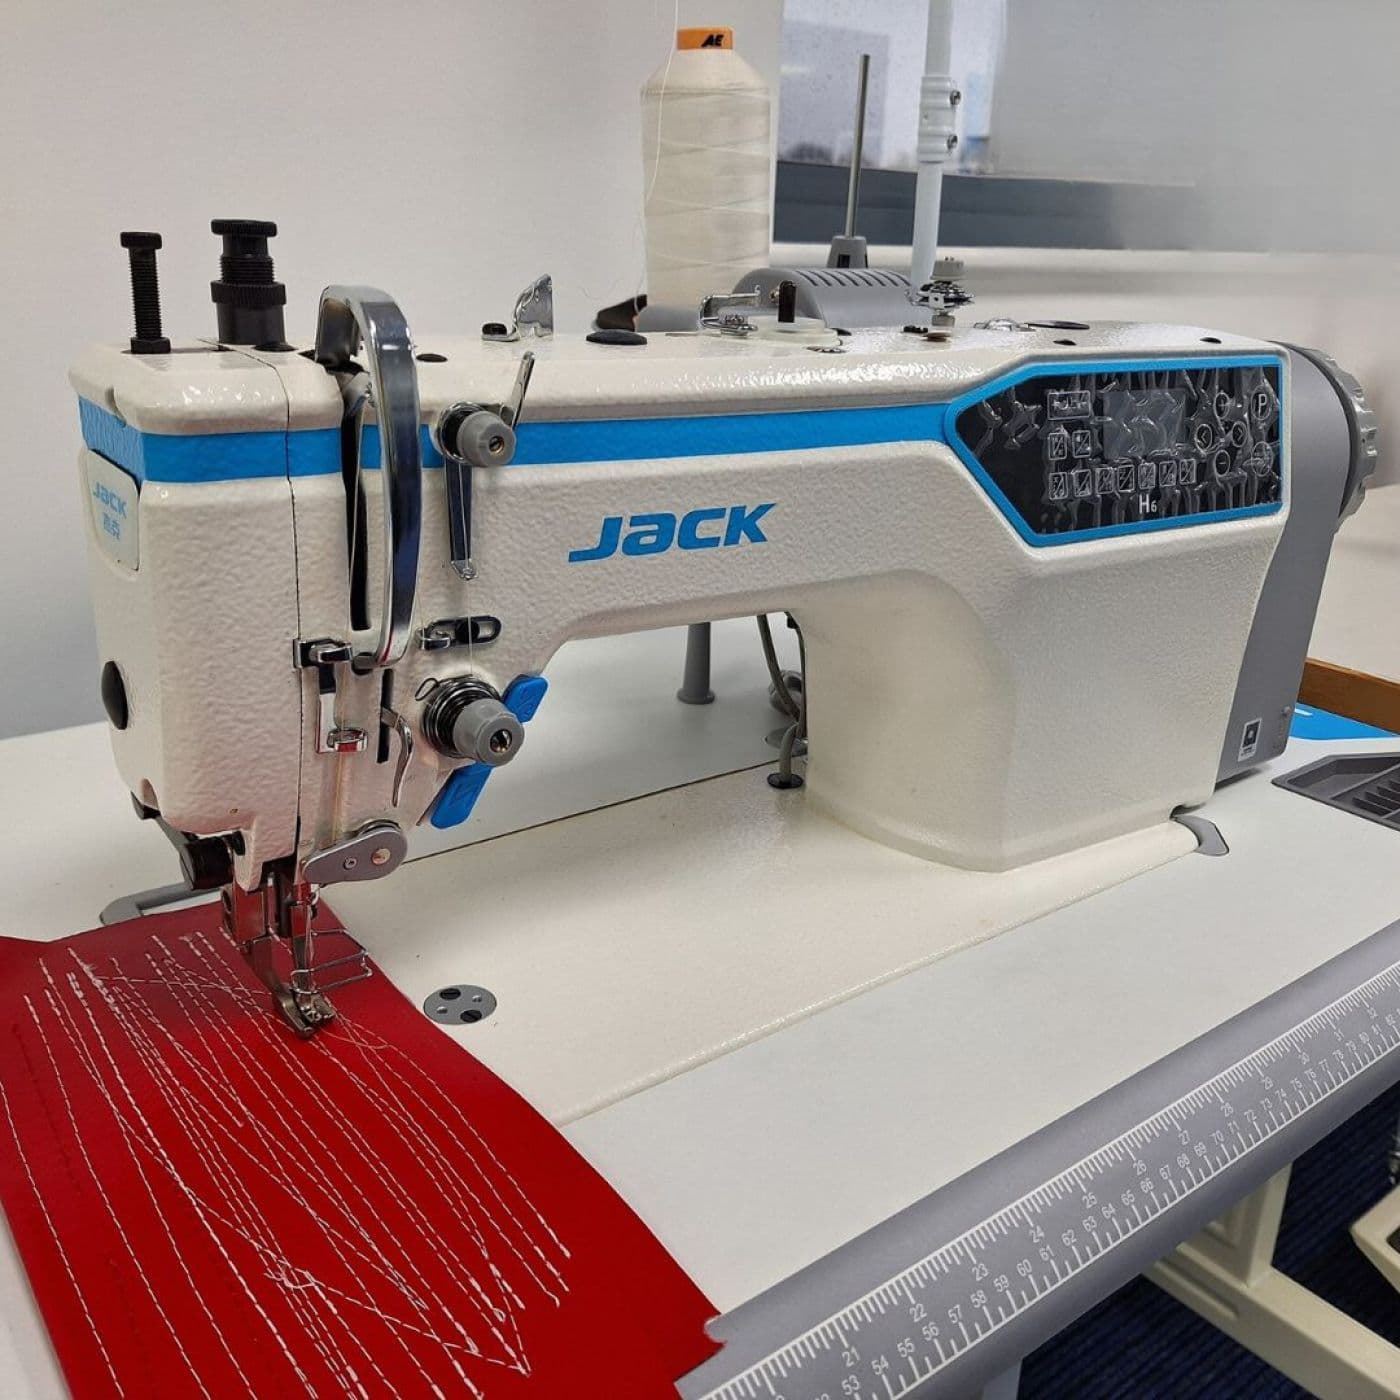 JACK JK-H6-CZ-4 DOBLE ARRASTRE CORTAHILOS - Máquina de coser industrial doble arrastre - Imagen 3